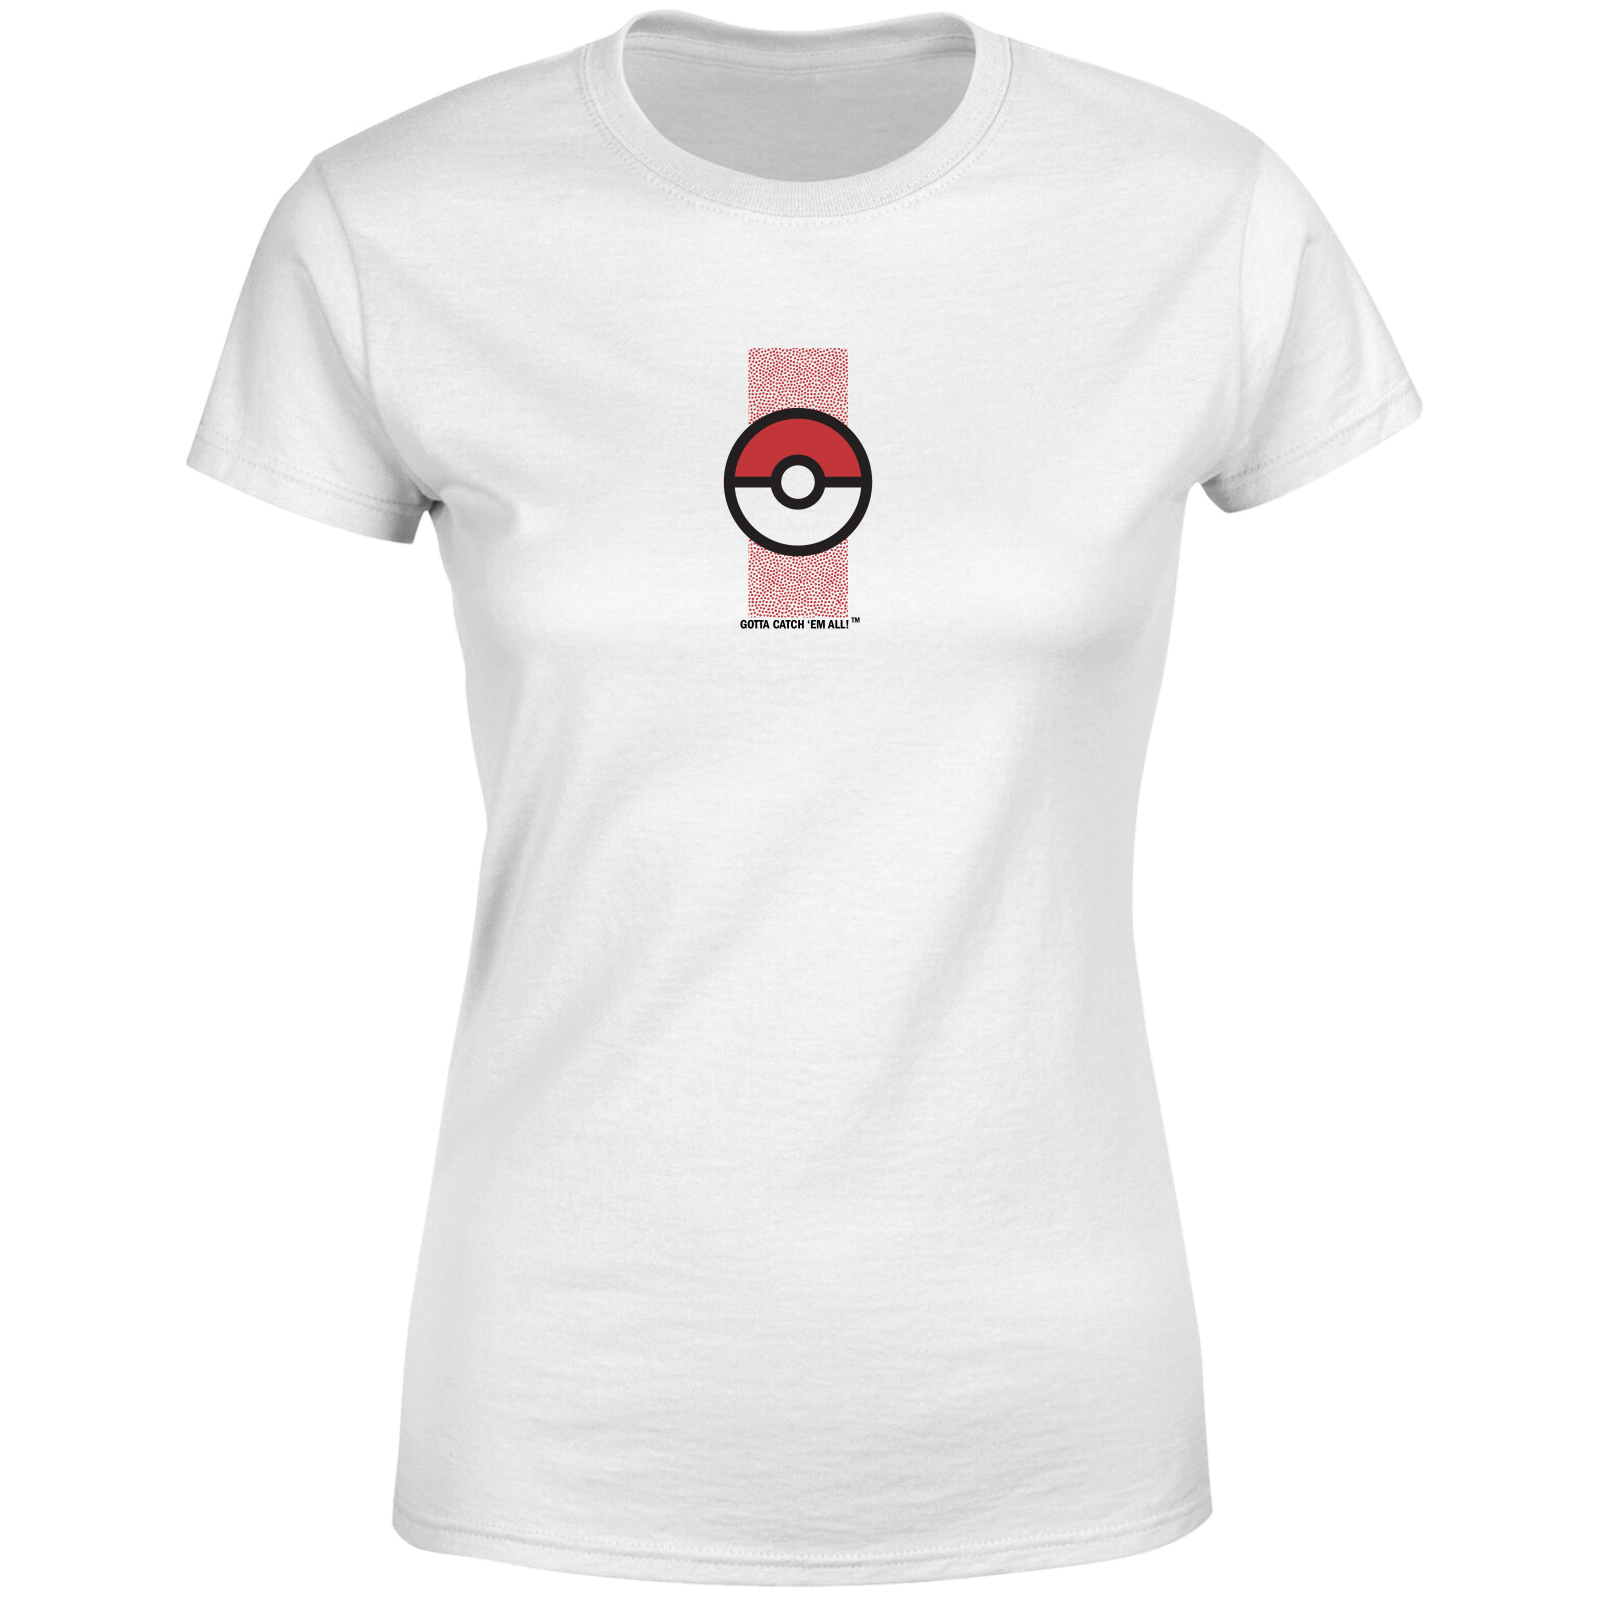 Pokemon Pokeball Women's T-Shirt - White - XS - White